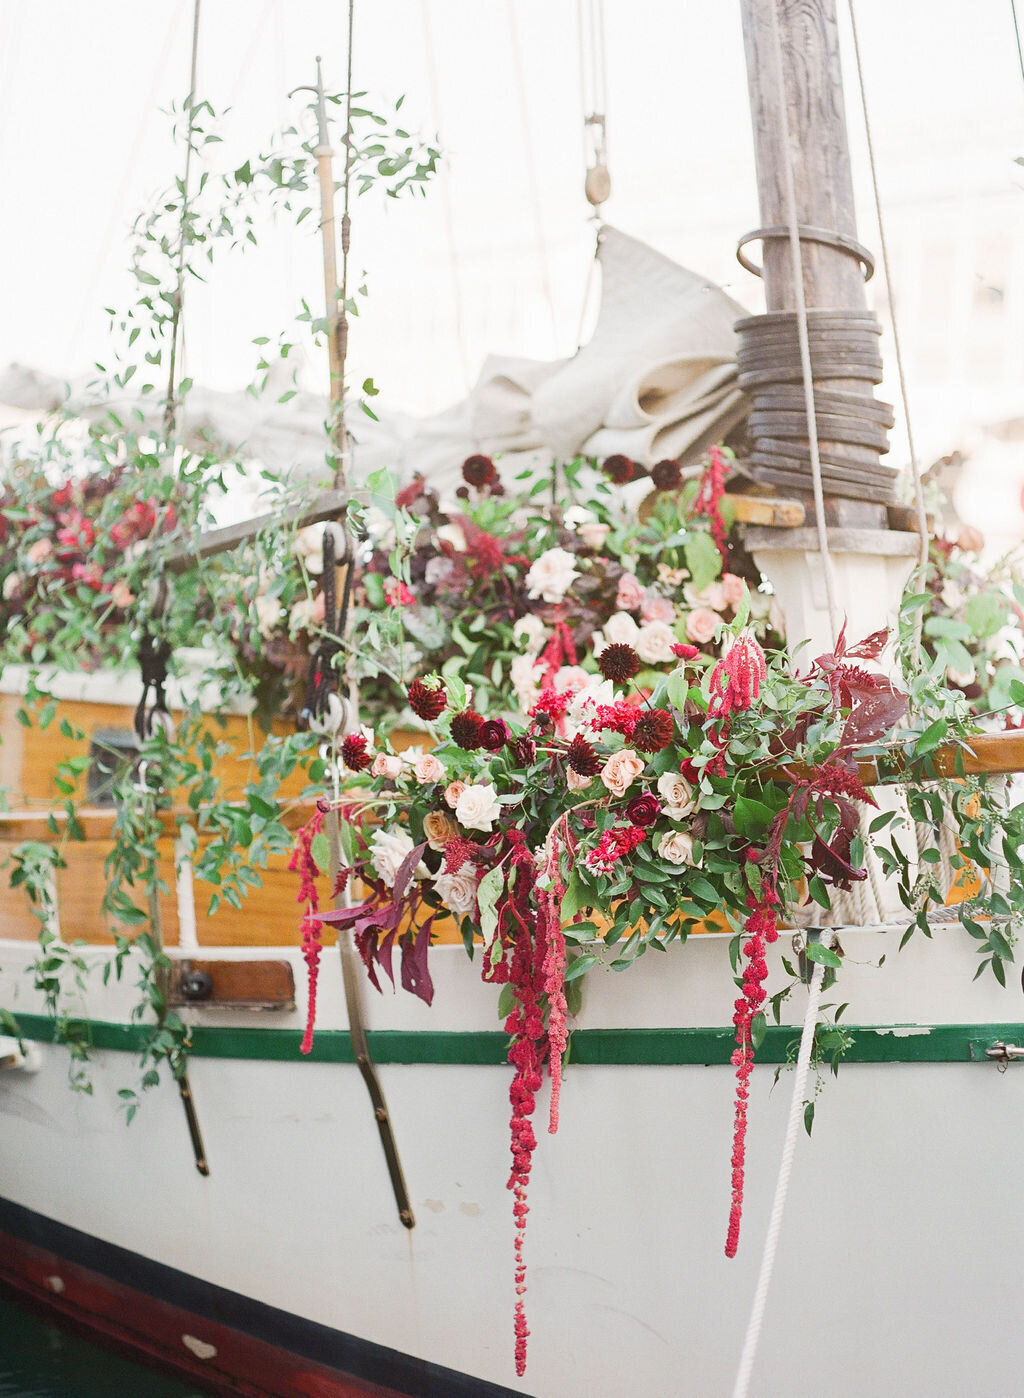 Kate-Murtaugh-Events-Boston-Harbor-sail-boat-elopement-wedding-planner-moody-florals